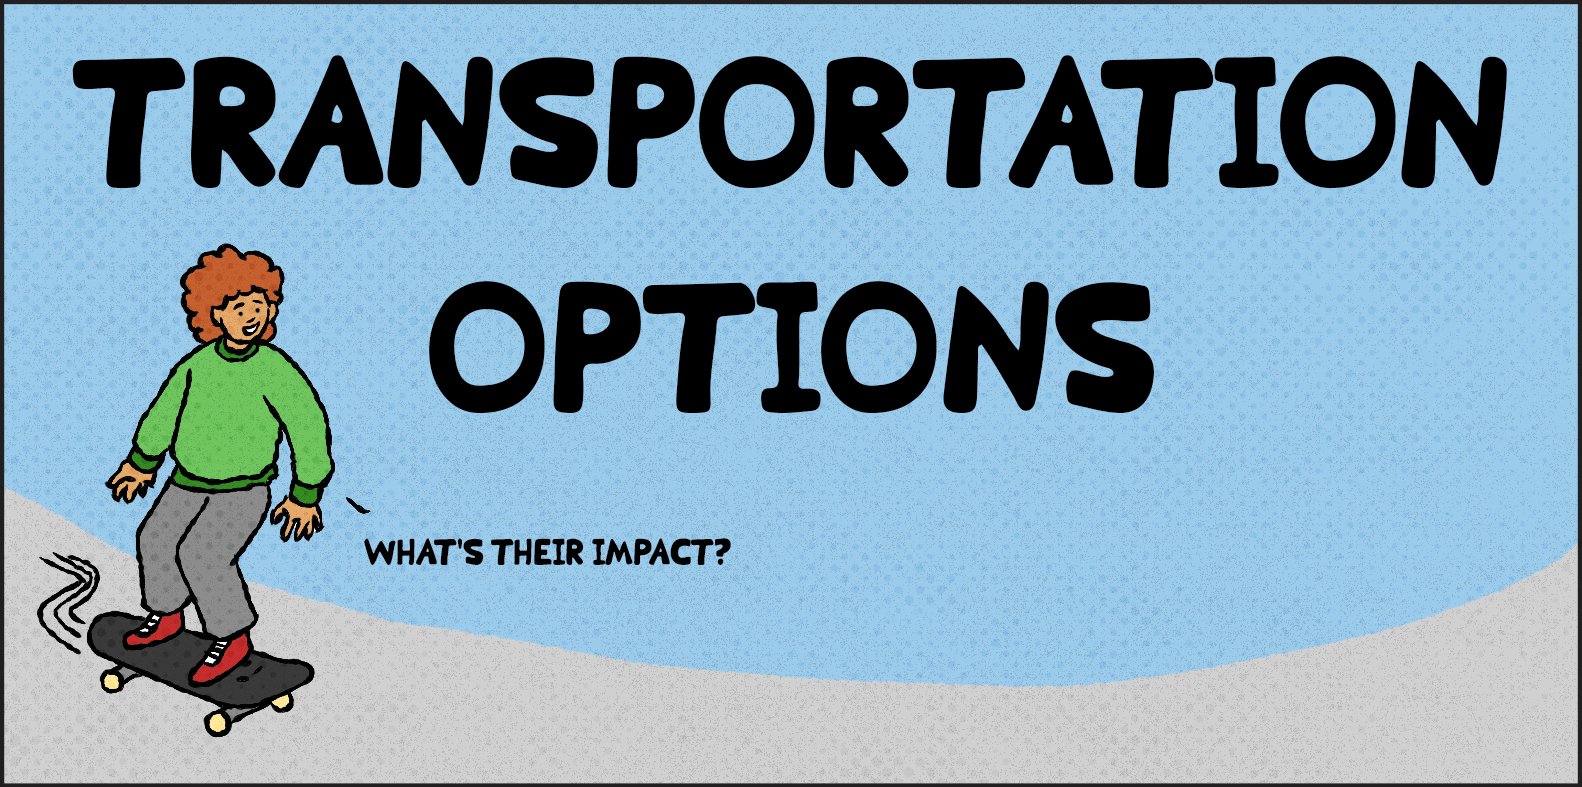 Transportation Options title